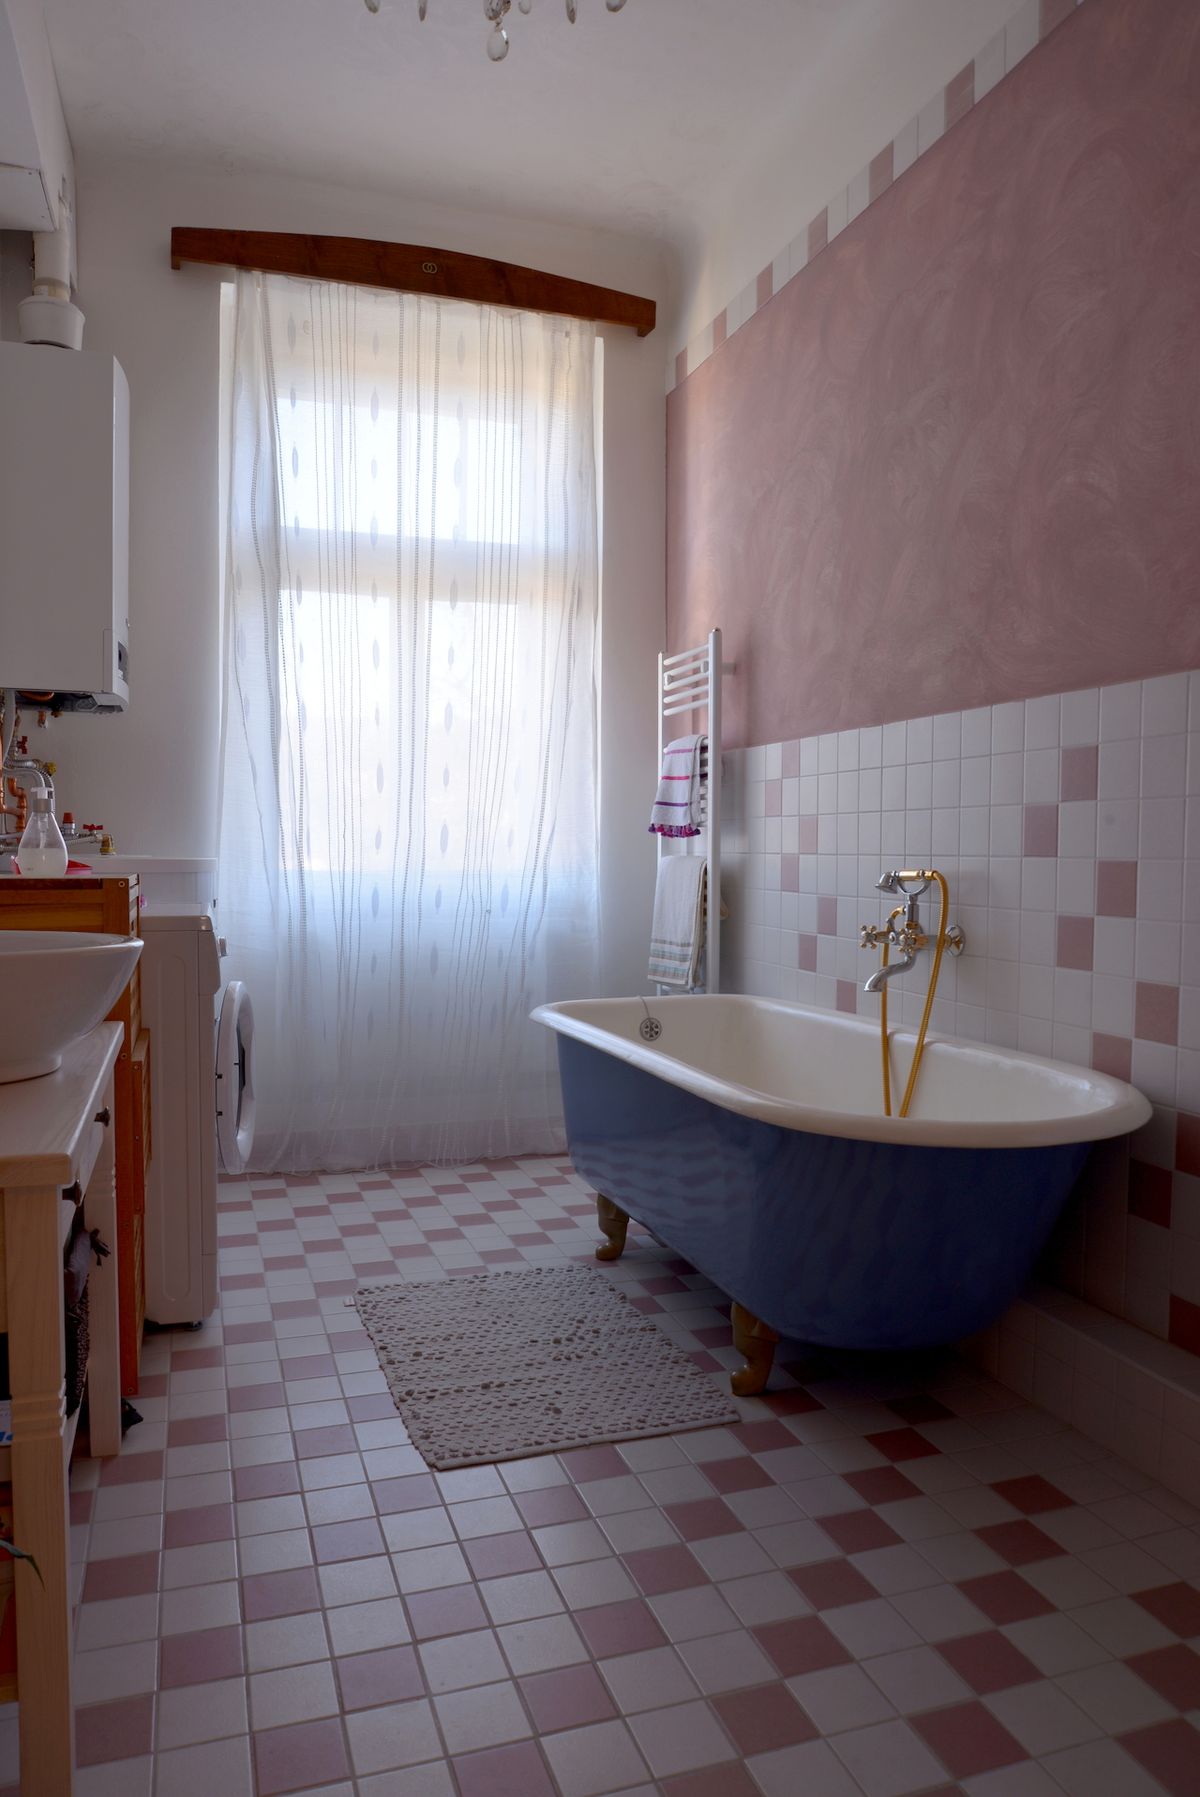 Dominantou růžovo bílé koupelny je modrá litinová vana z roku 1924.